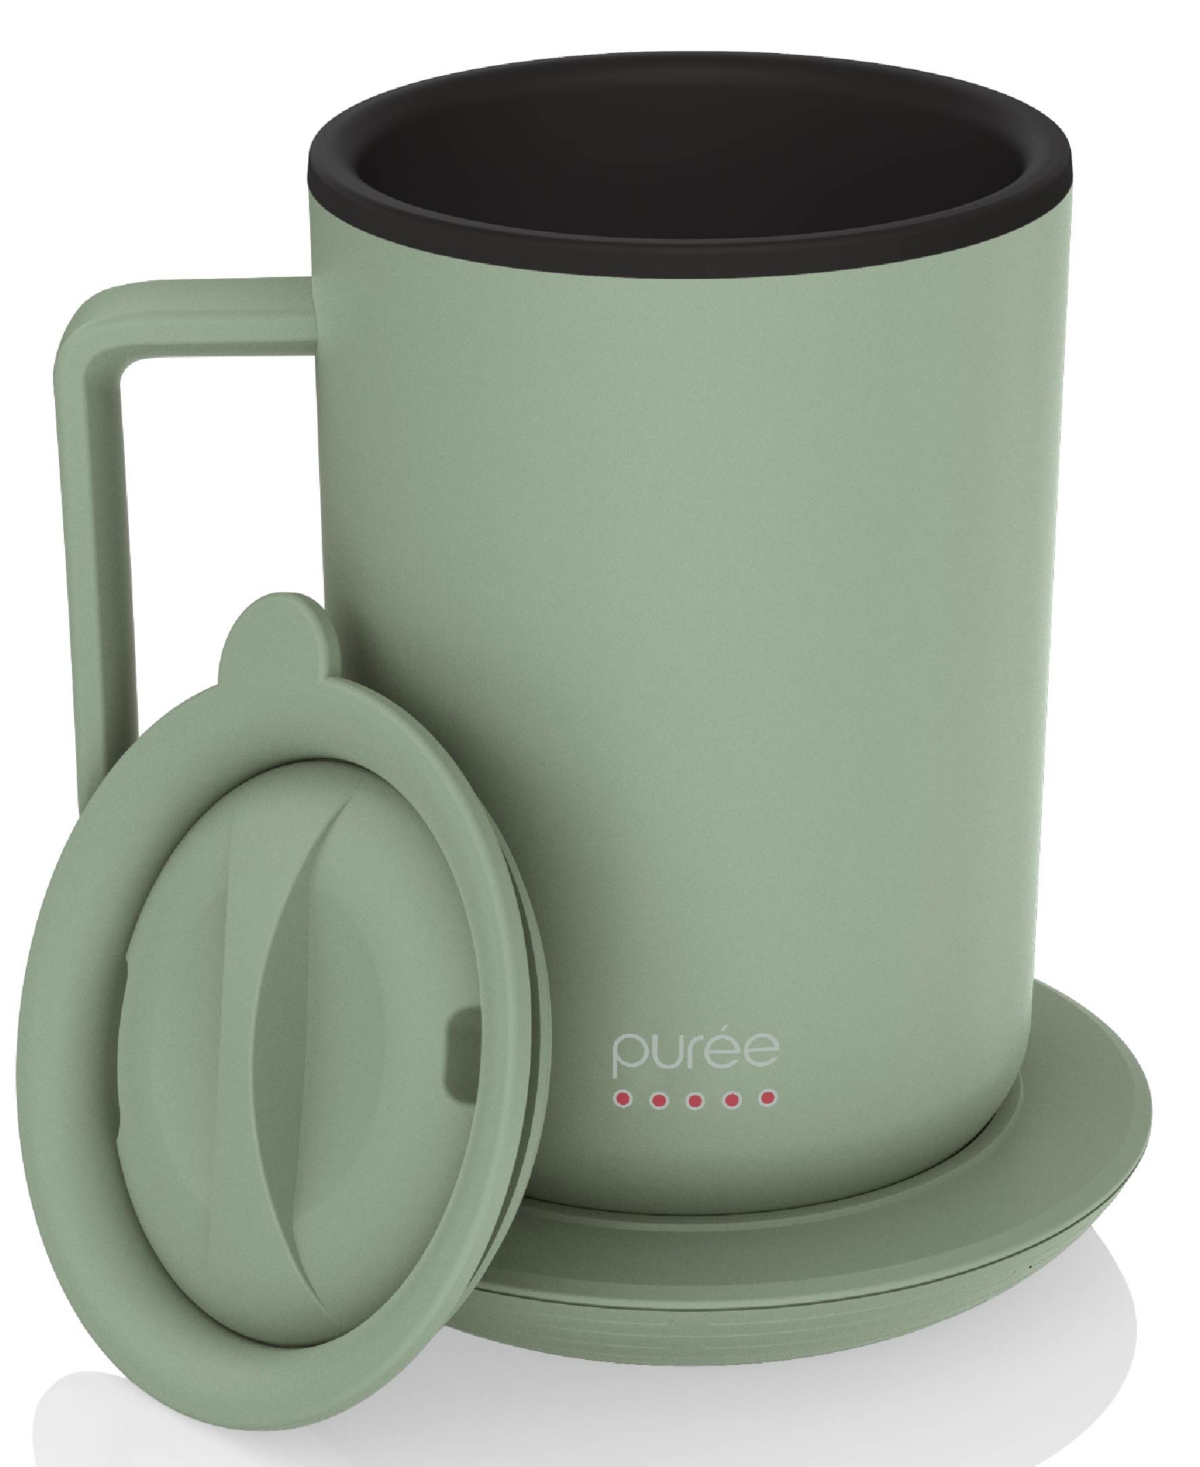 Tzumi Puree Warming Coffee Mug, 12 Oz. Stainless Steel Coffee Mug With Mug Warmer Coaster And Lid In Sage